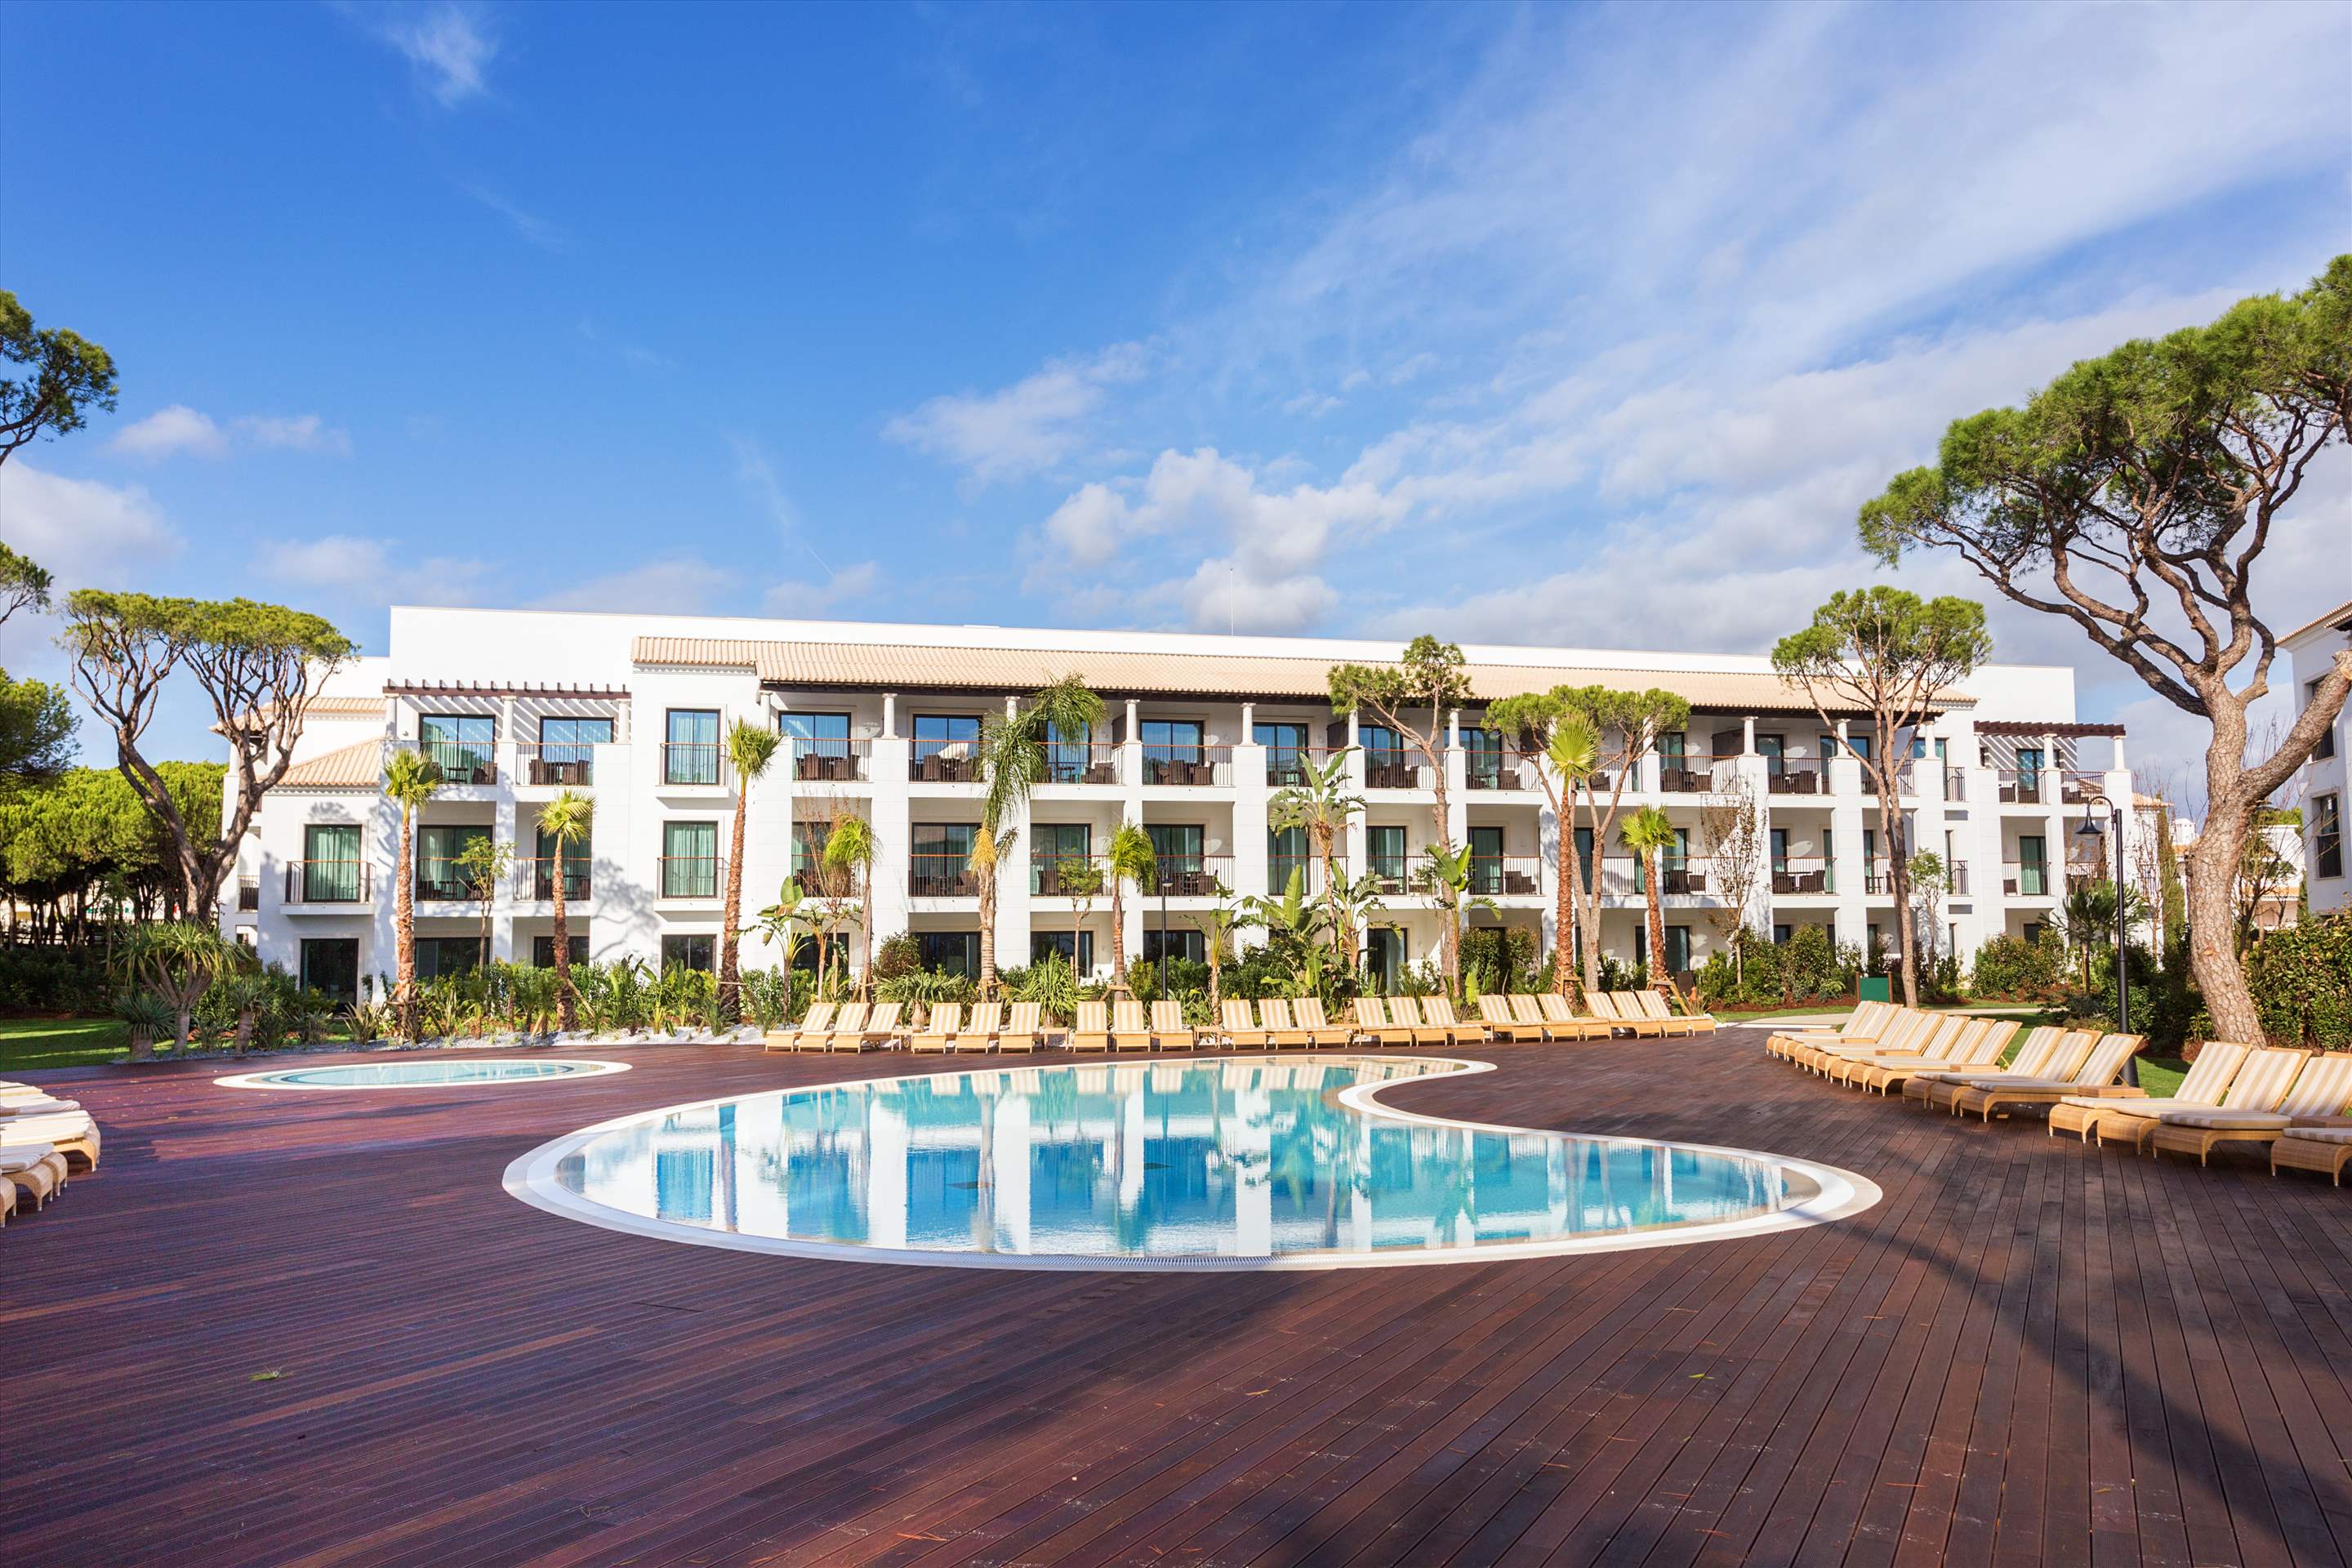 Pine Cliffs Gardens, Three Bedroom Suite, S/C Basis, 3 bedroom apartment in Pine Cliffs Resort, Algarve Photo #1